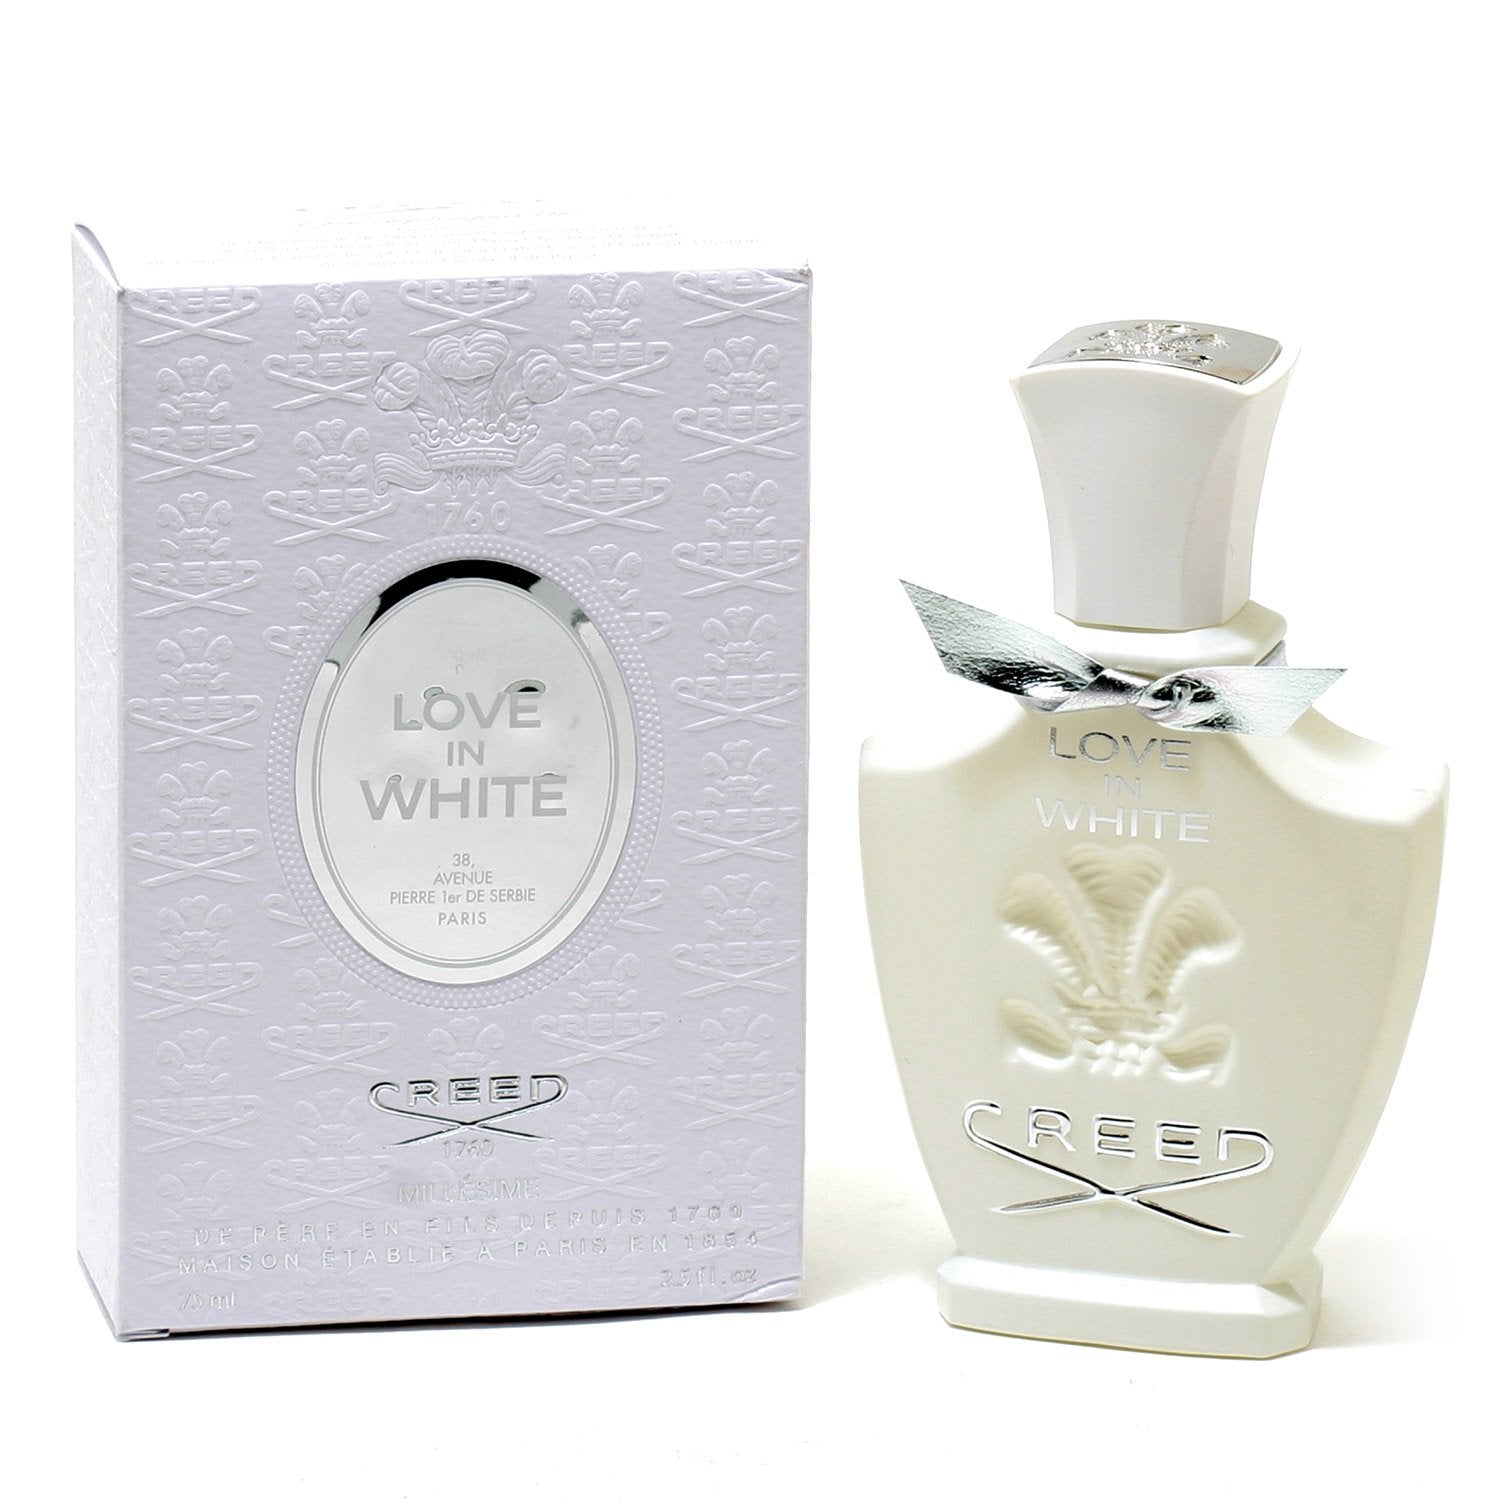 CREED LOVE IN WHITE FOR WOMEN - EAU DE PARFUM SPRAY, 2.5 OZ – Fragrance Room